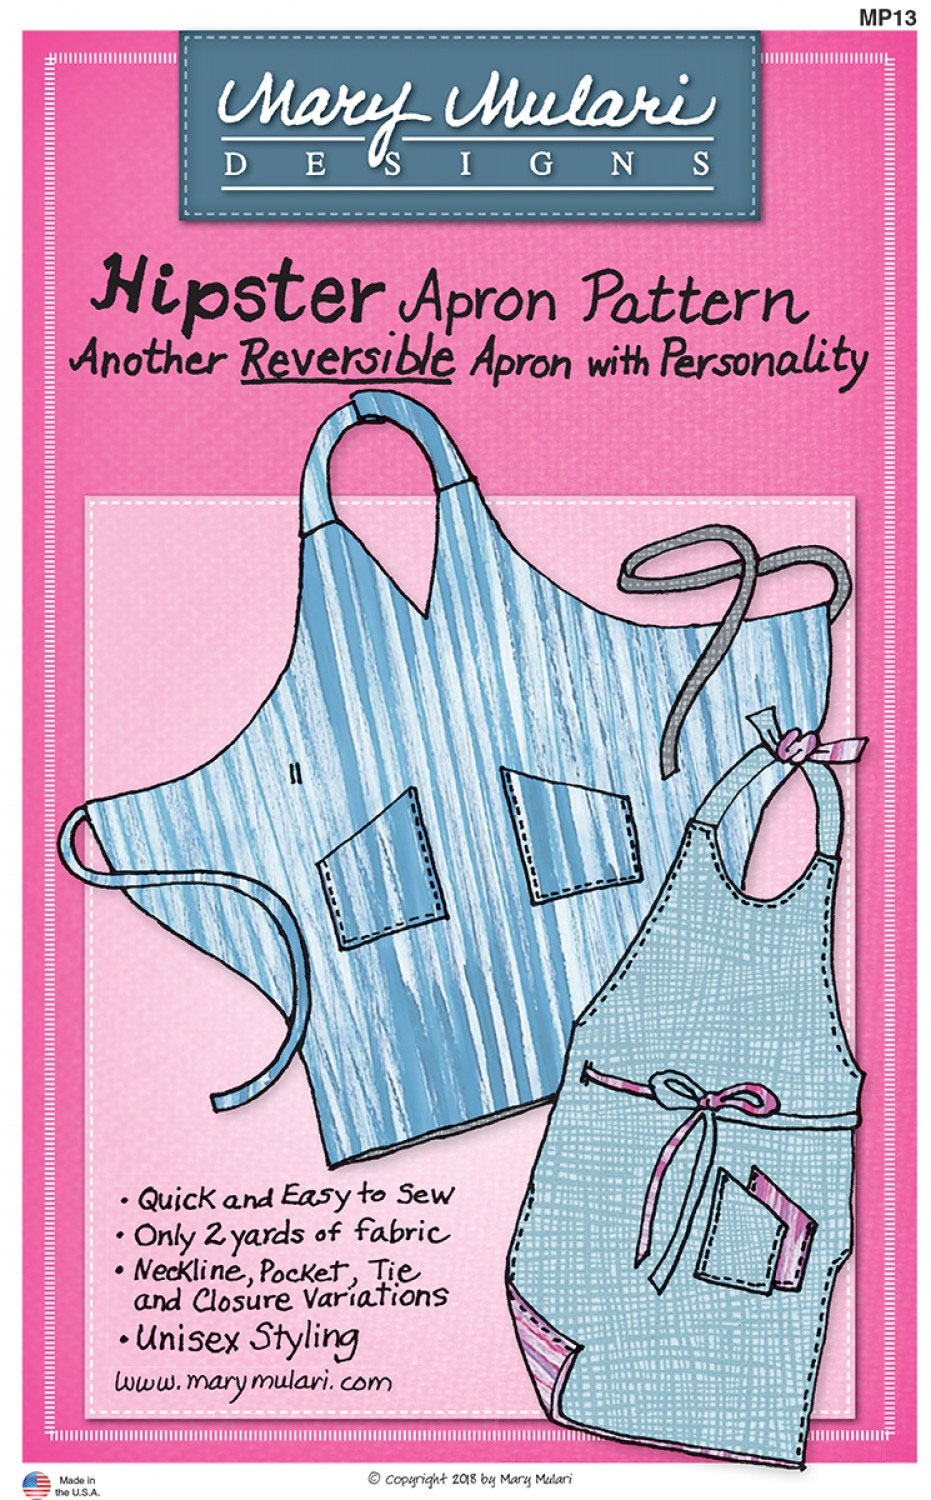 Hipster-Apron-Pattern-Mary-Mulari-front